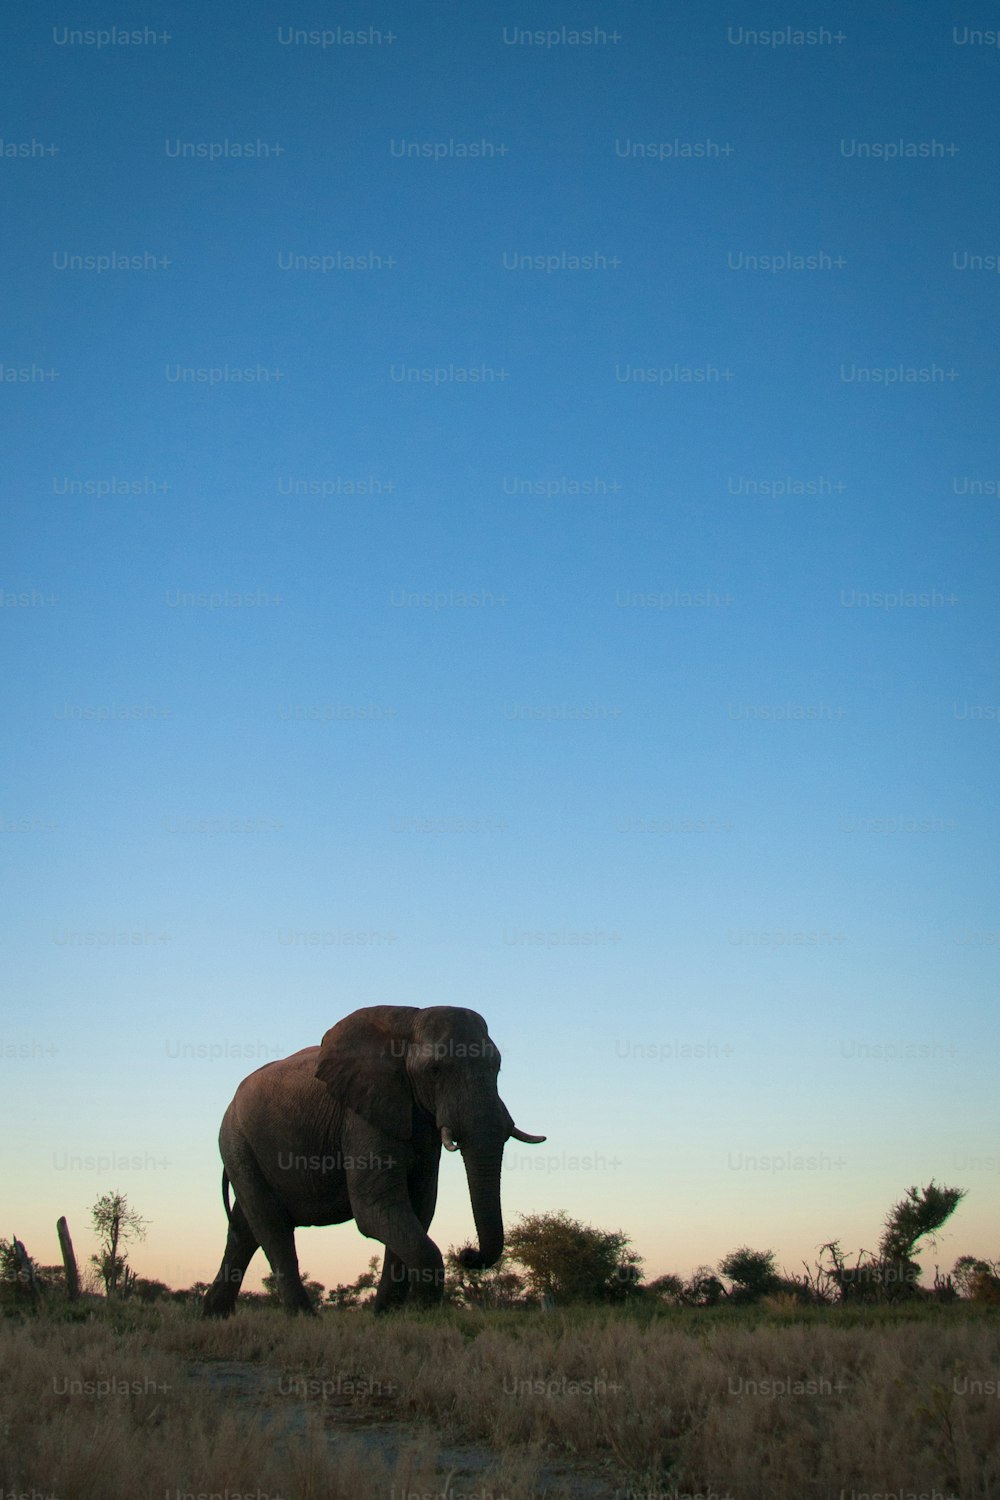 Elefante andando no veld